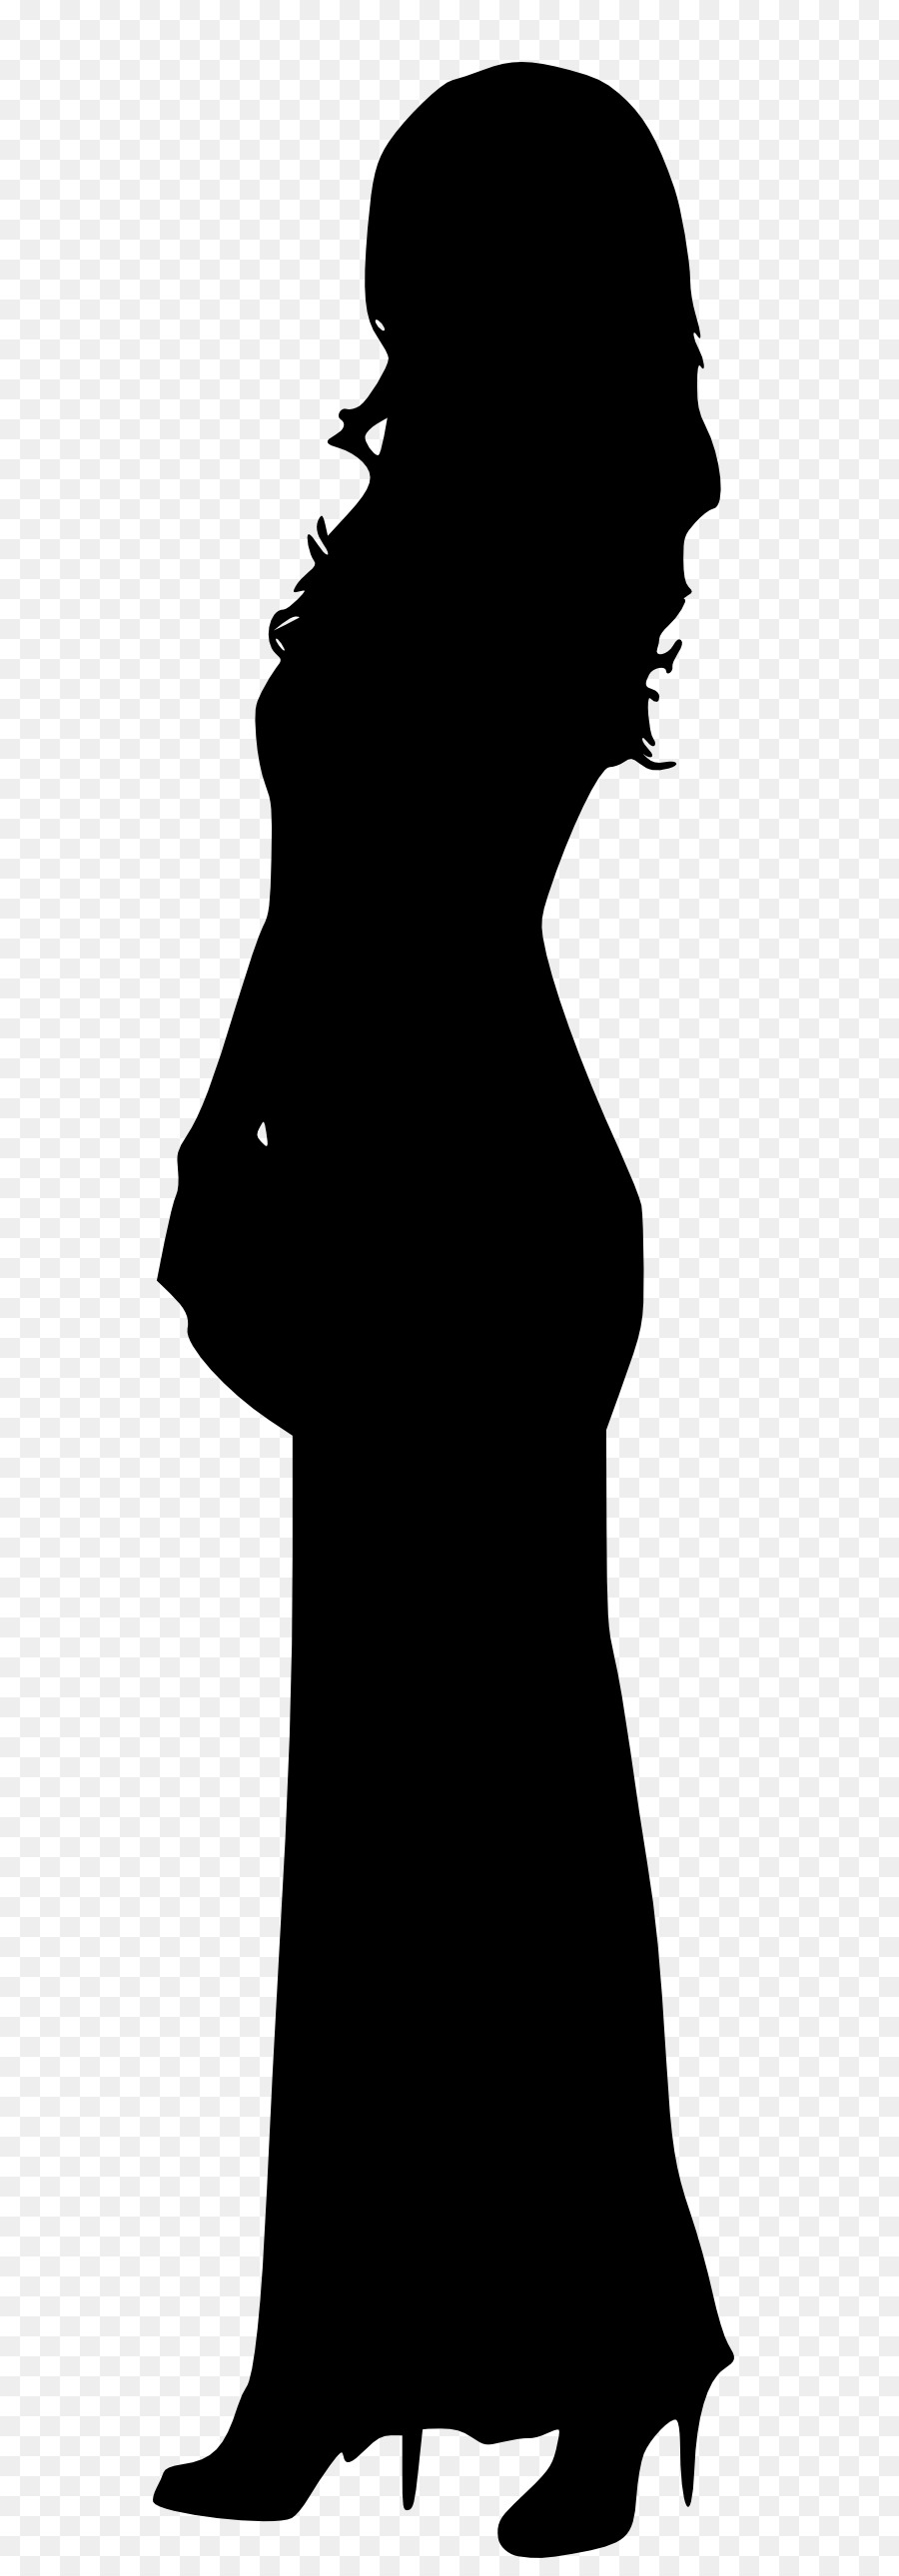 Silhouette Woman Clip art - woman silhouette png download - 894*2562 - Free Transparent Silhouette png Download.